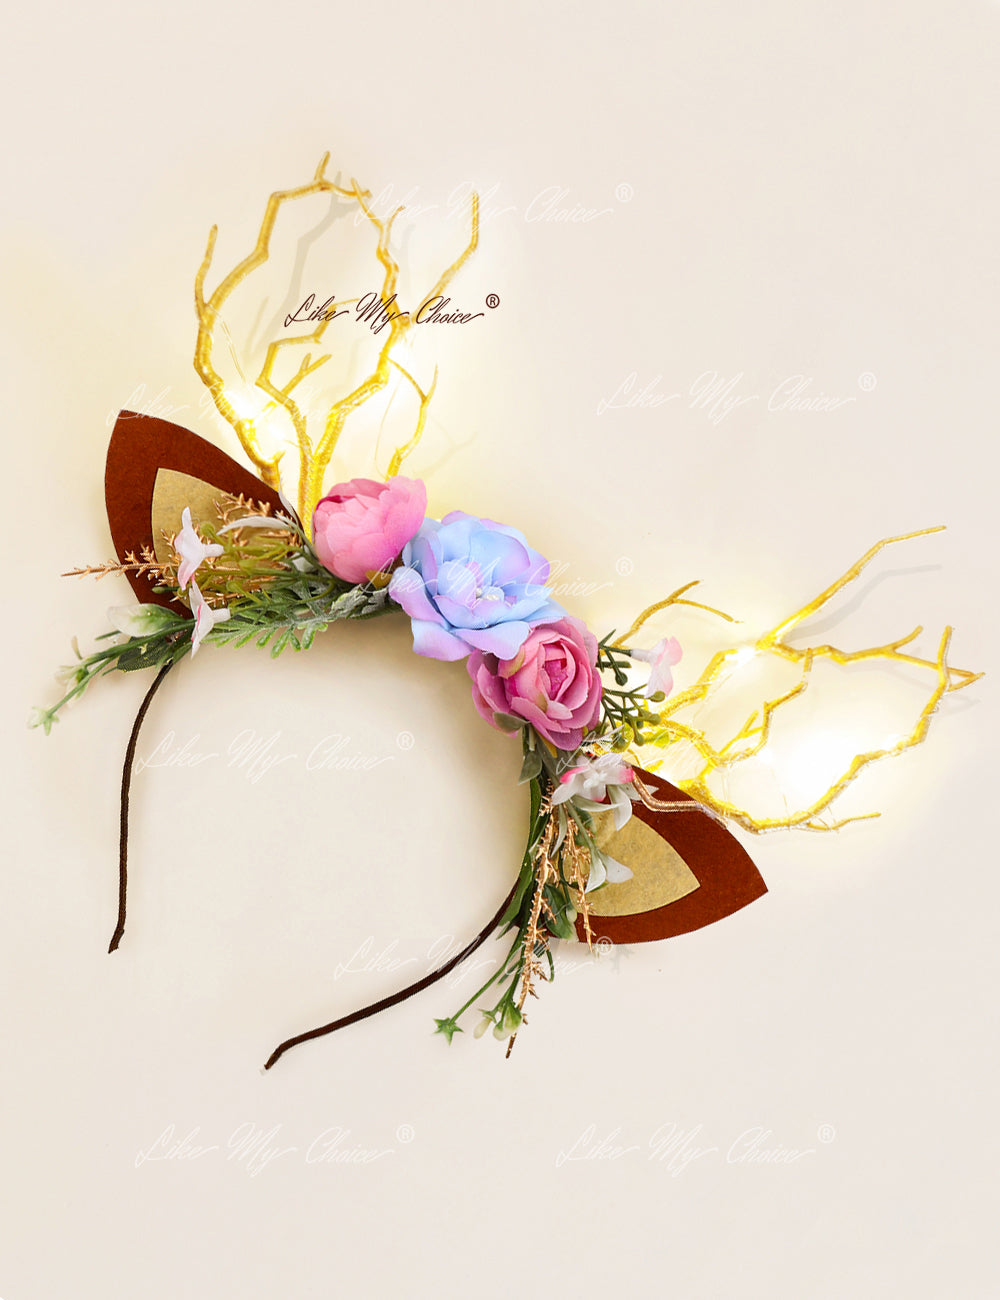 Flower beauty and the beast Christams Reindeer Headband | LikeMyChoice®